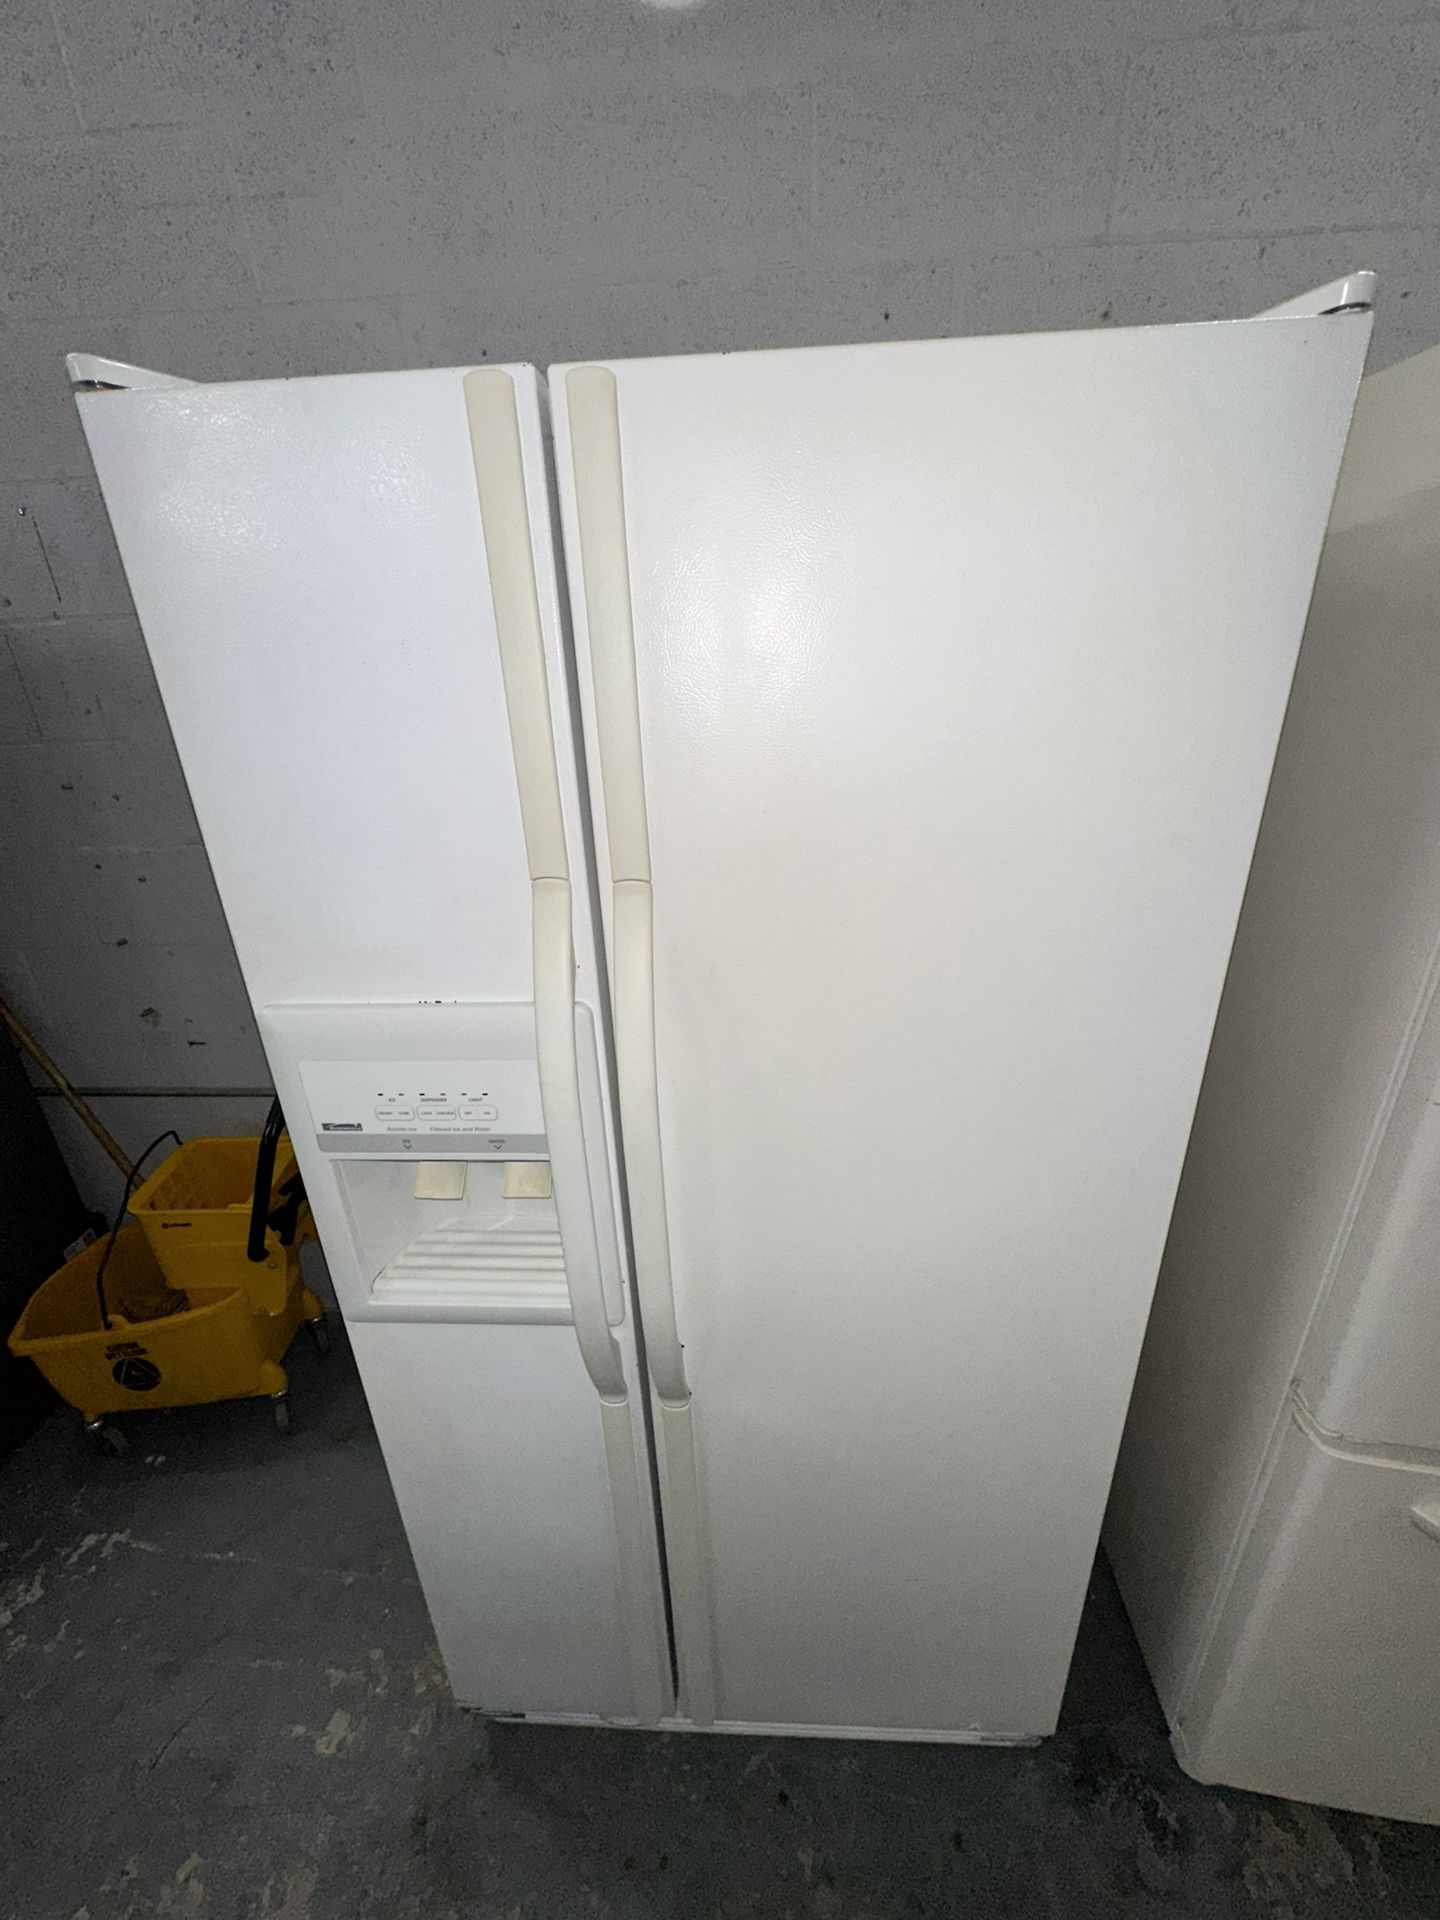 Kenmore Refrigerator “33